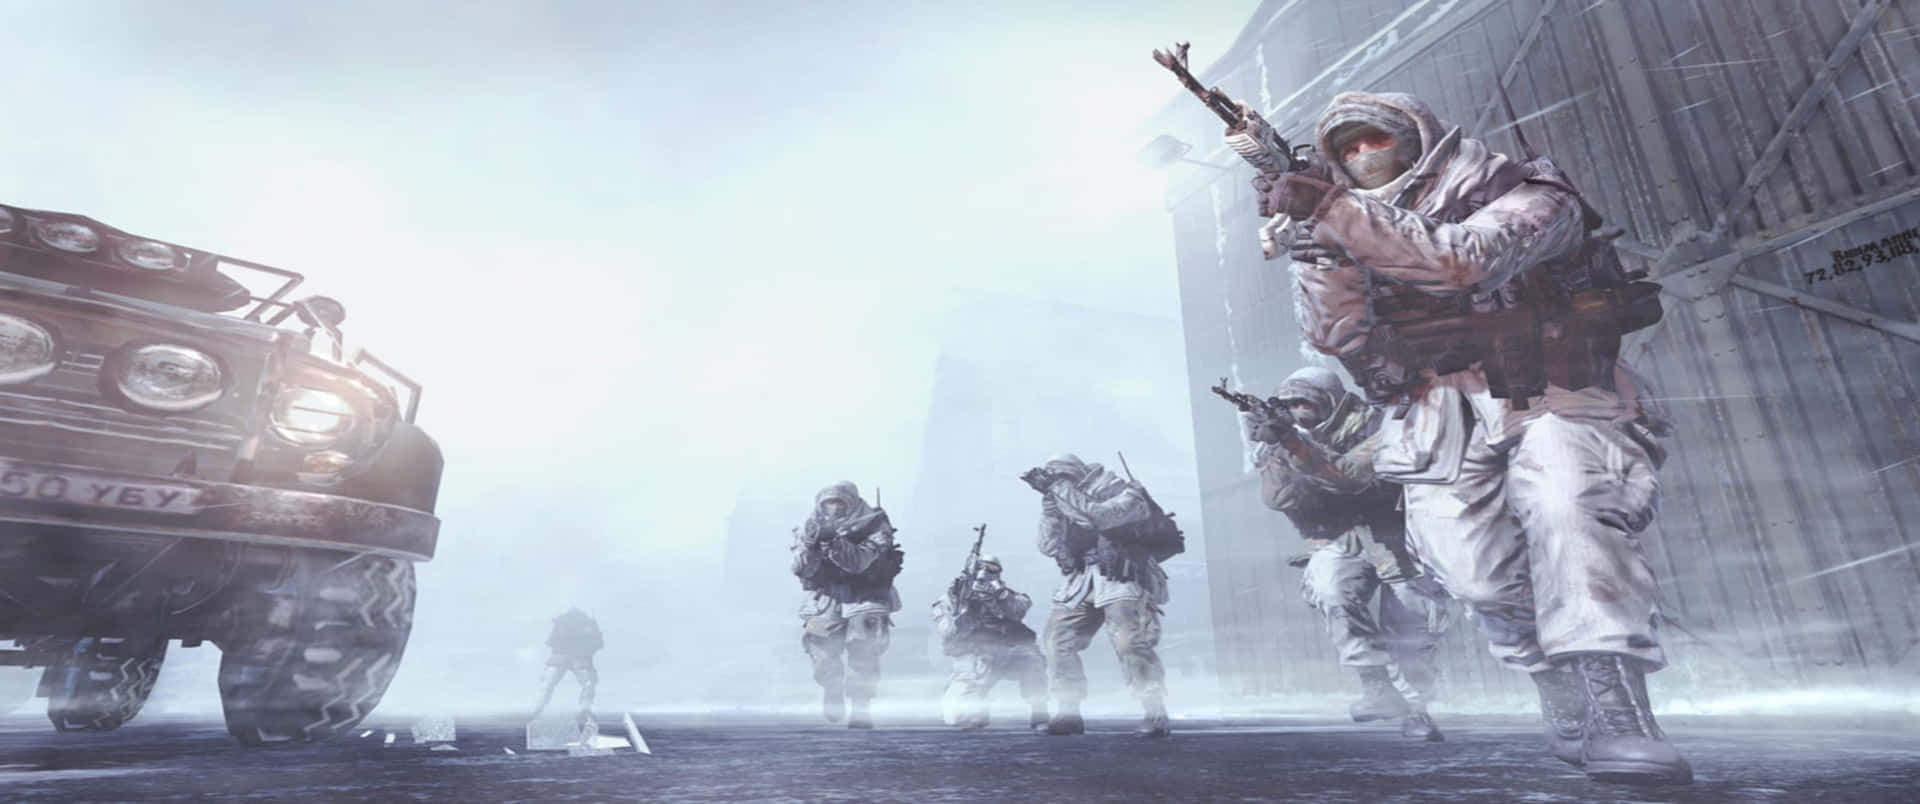 Soldaterattackerar 3440x1440p Call Of Duty Modern Warfare-bakgrund.